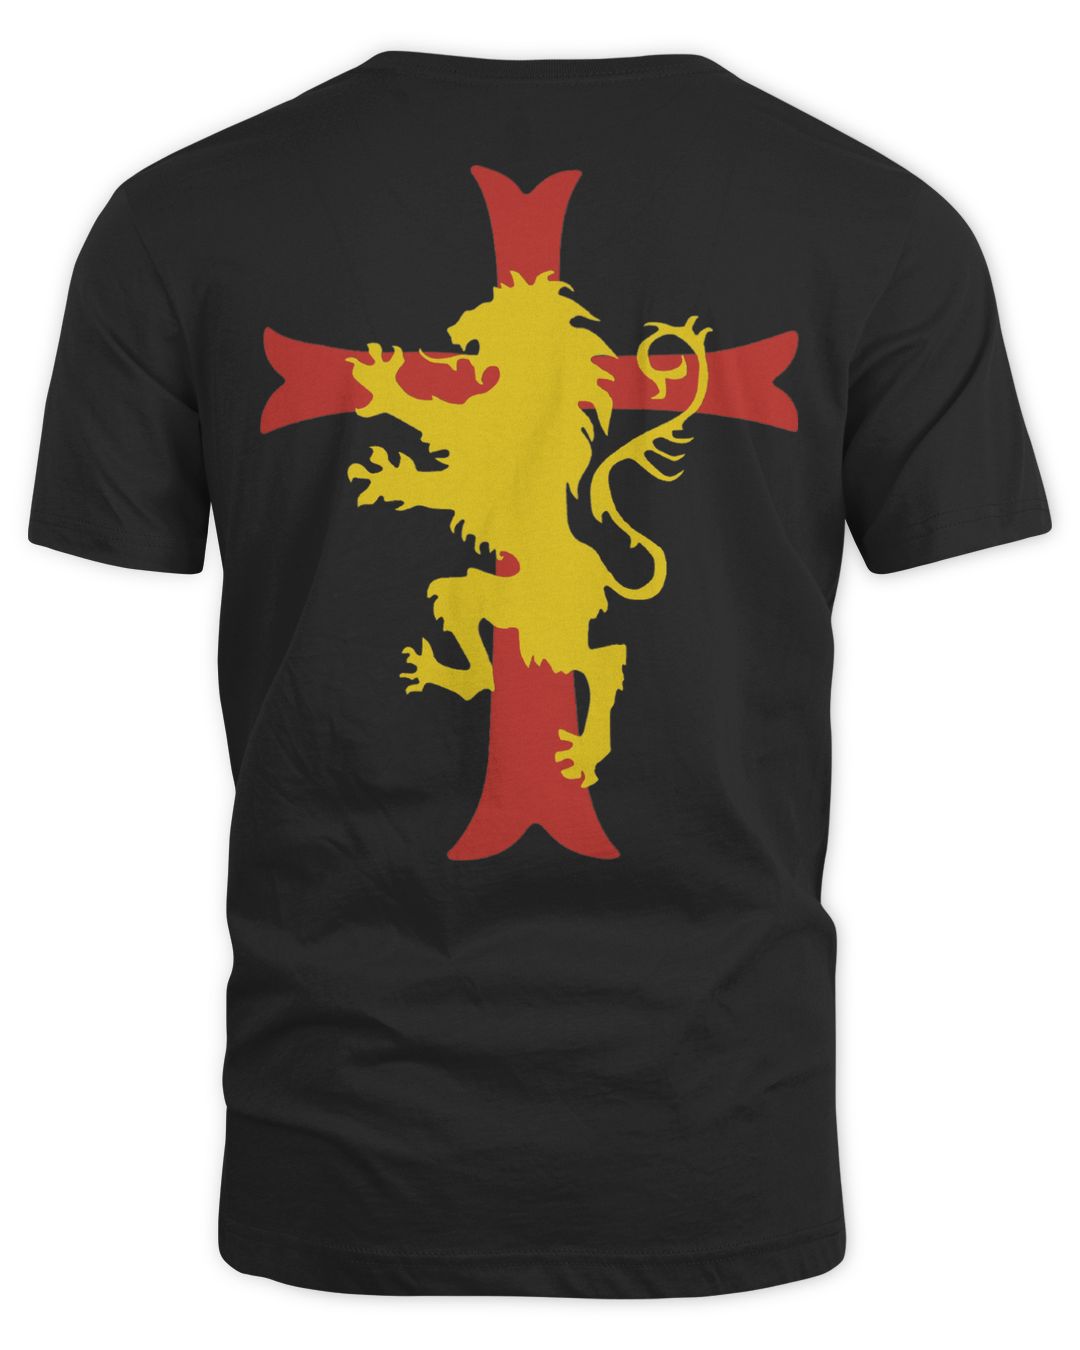 Knights Templar T Shirt - The Cross And The Lion - Knights Templar ...